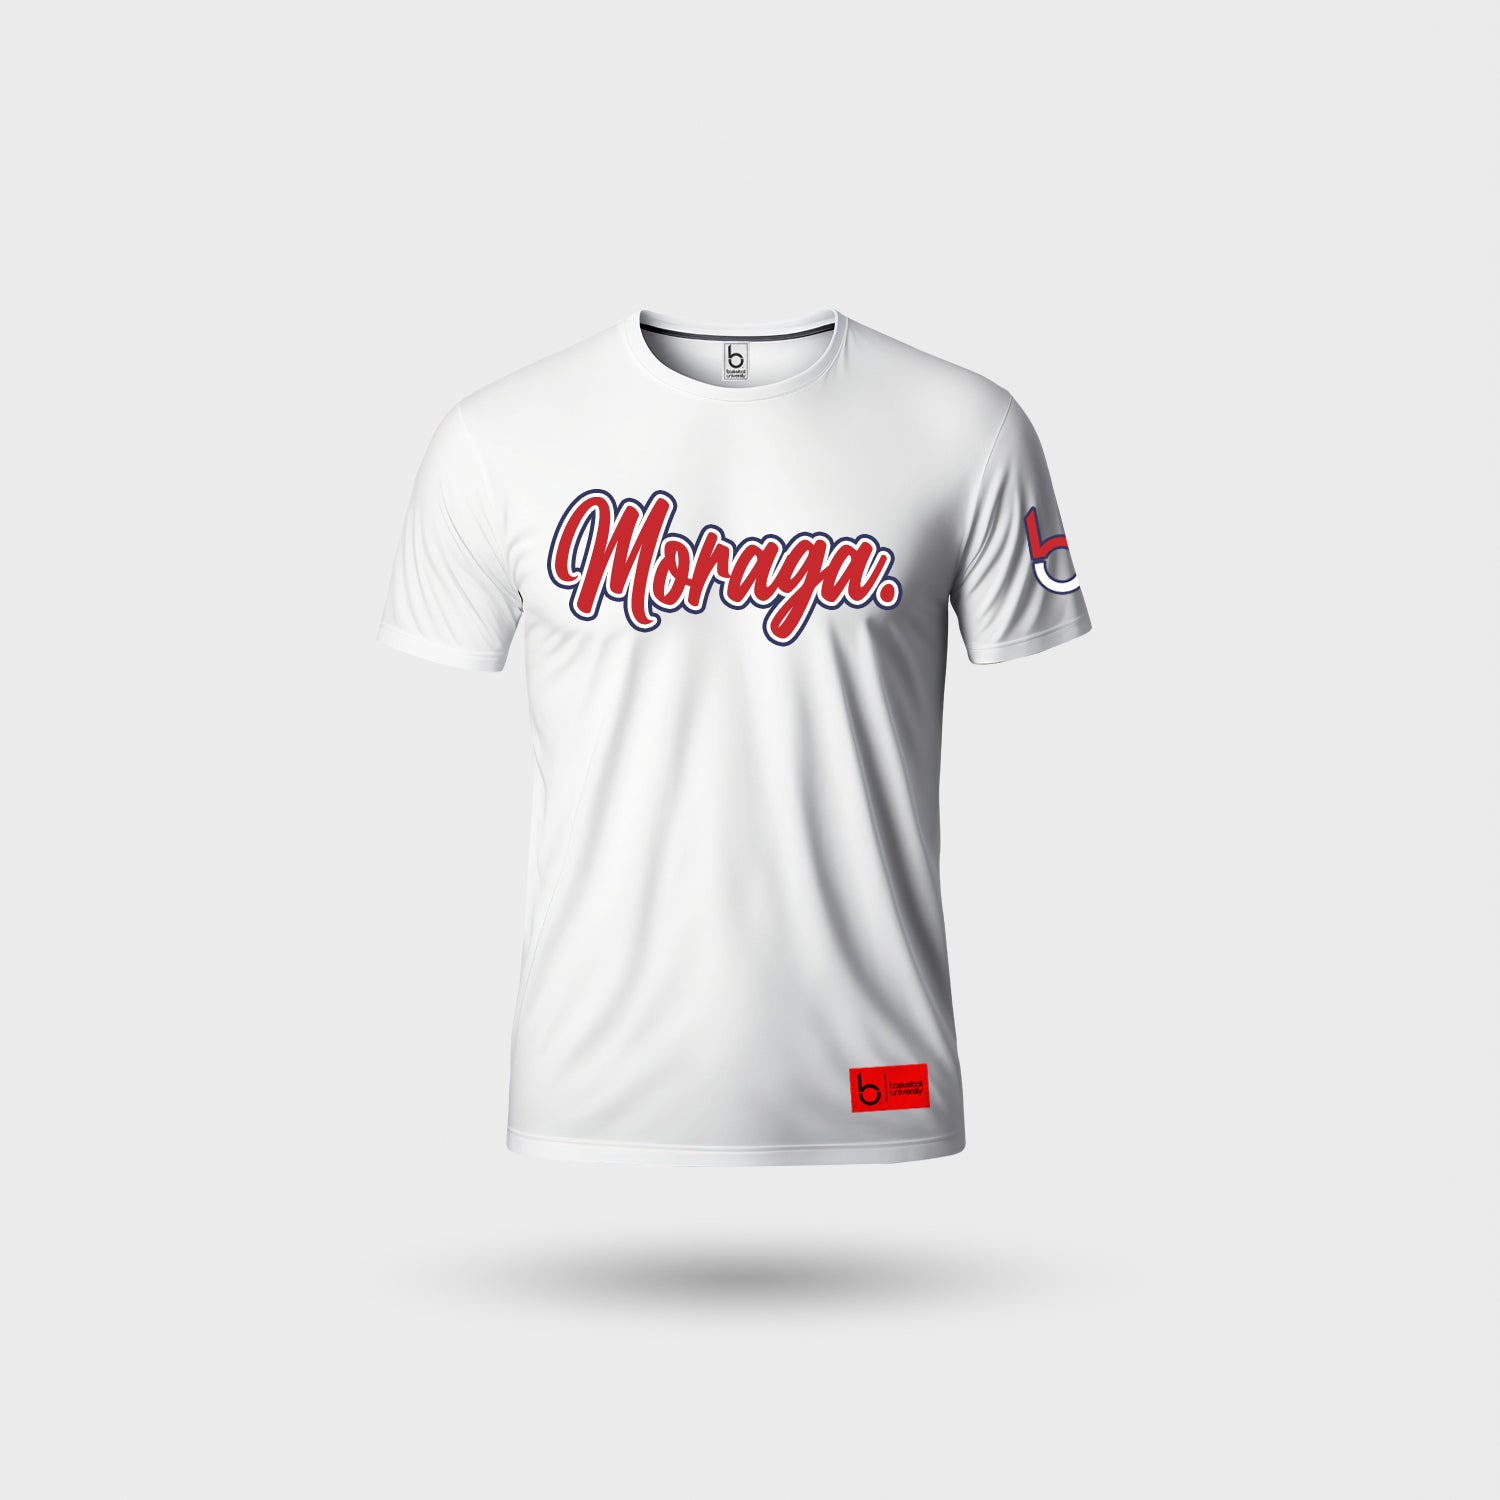 Moraga White - Hoop City T-Shirt